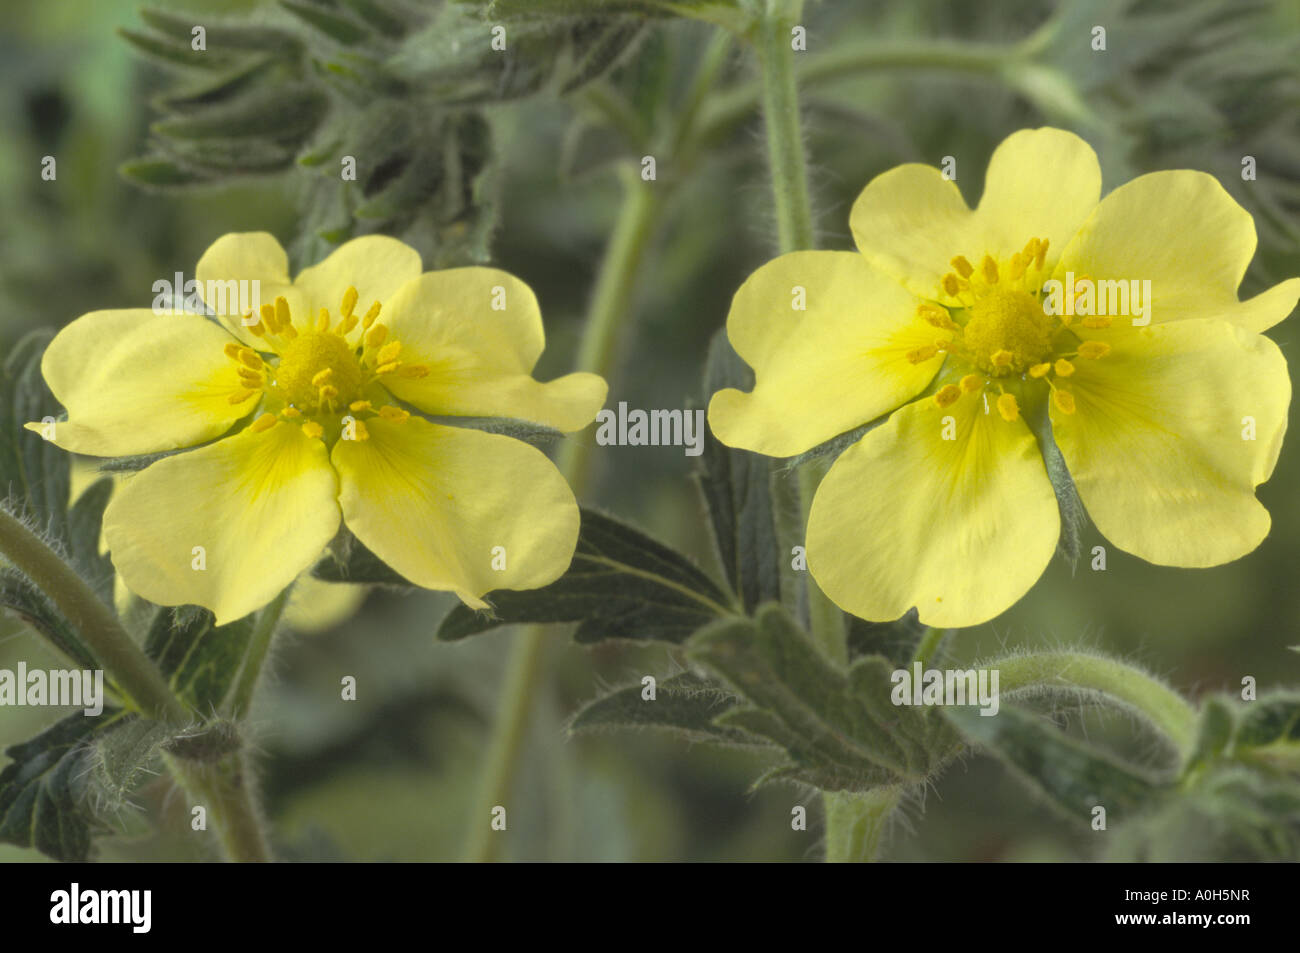 Potentilla recta var. sulphurea. (Cinquefoil) Close up of two yellow flowers. Stock Photo